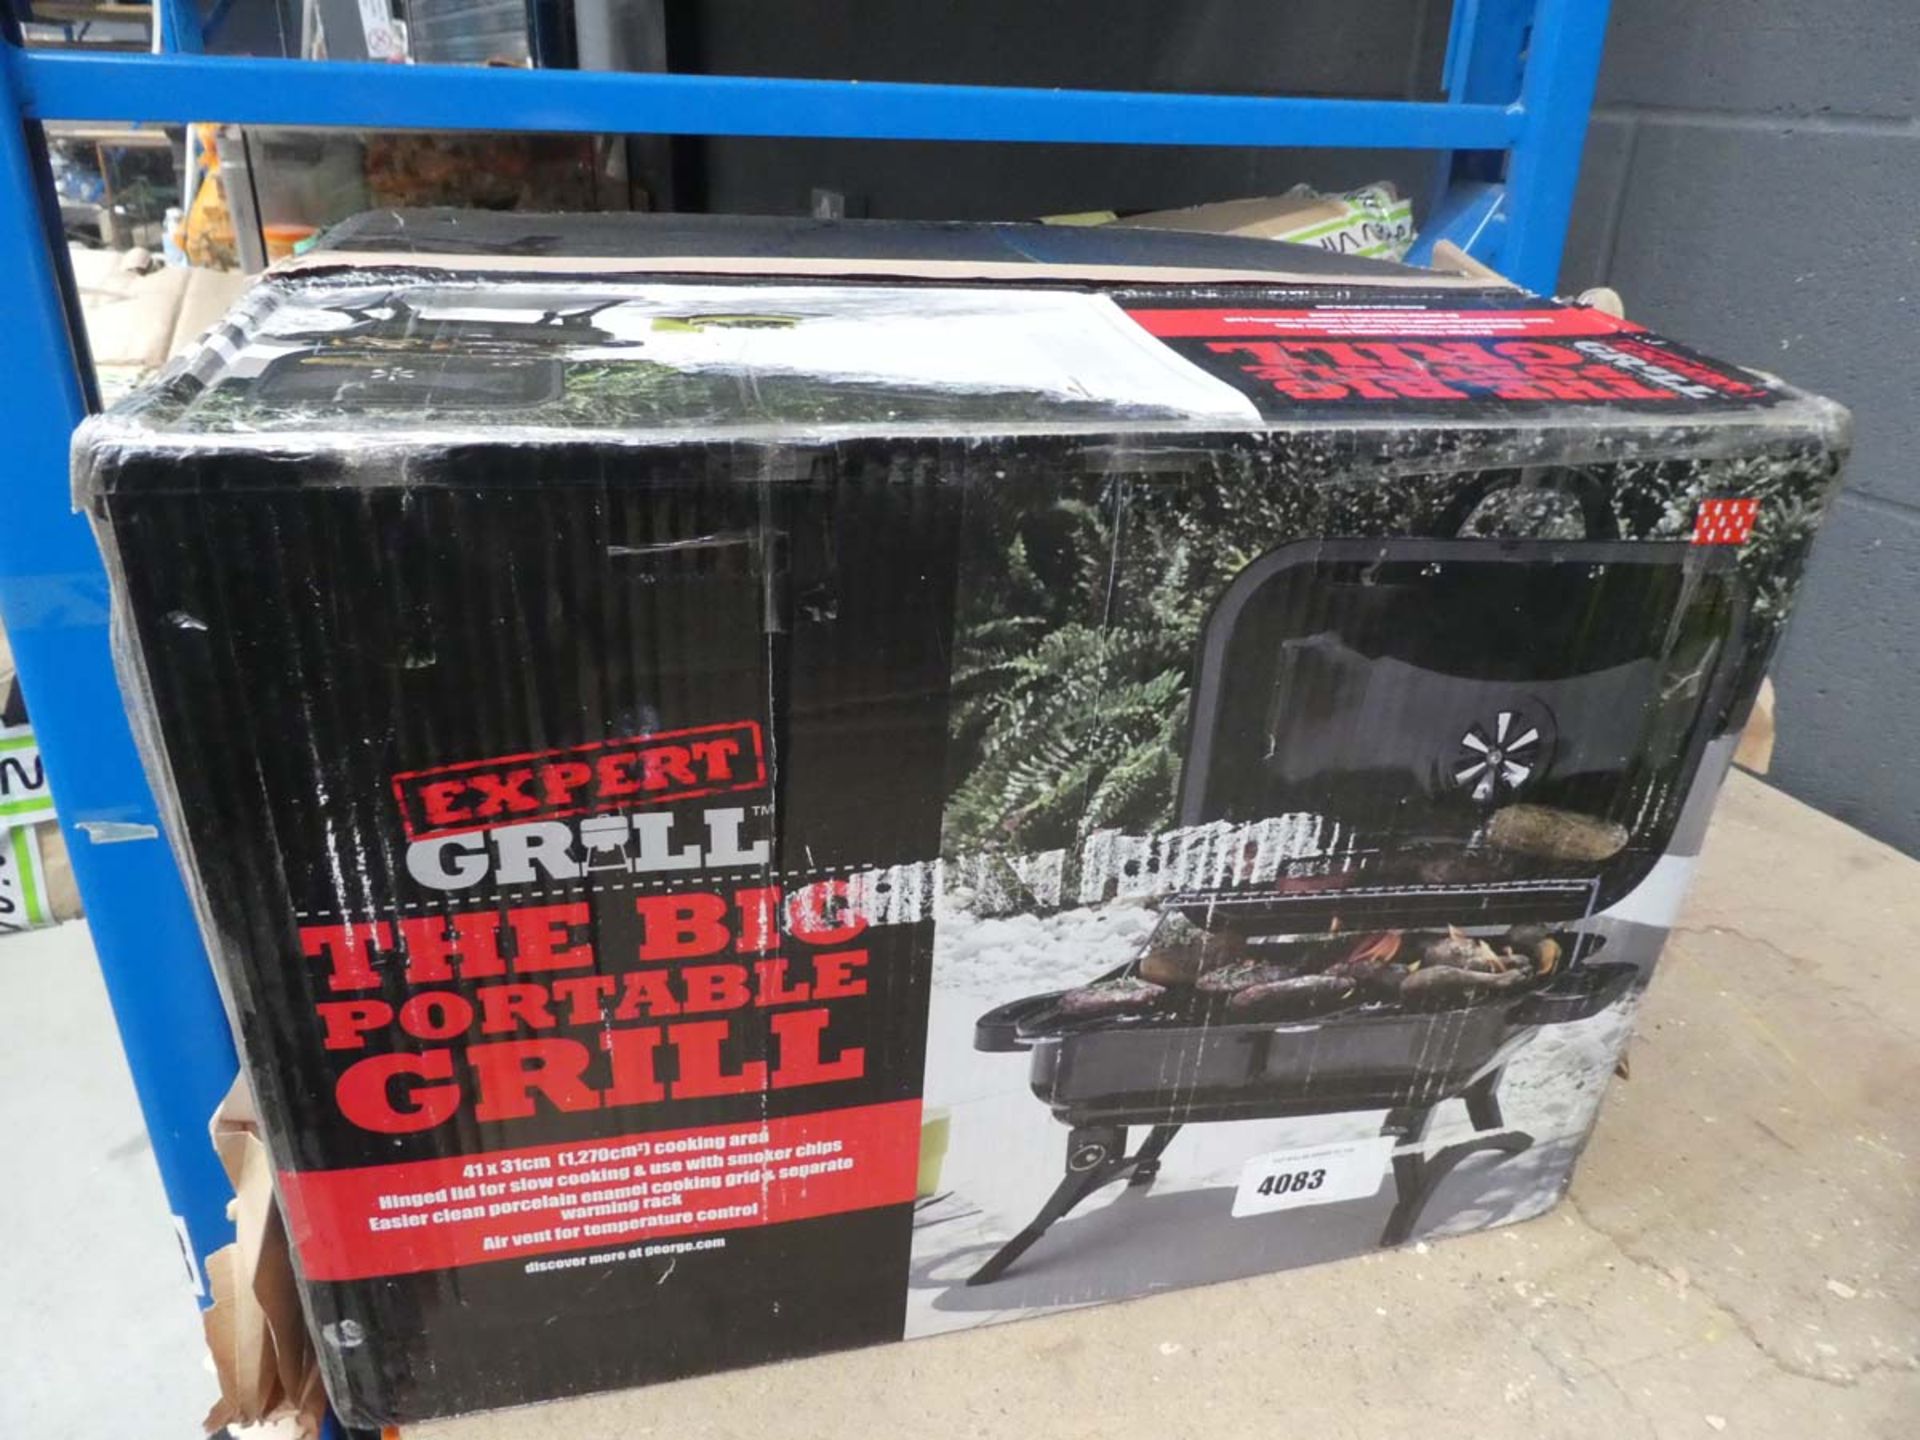 4112 Portable grill